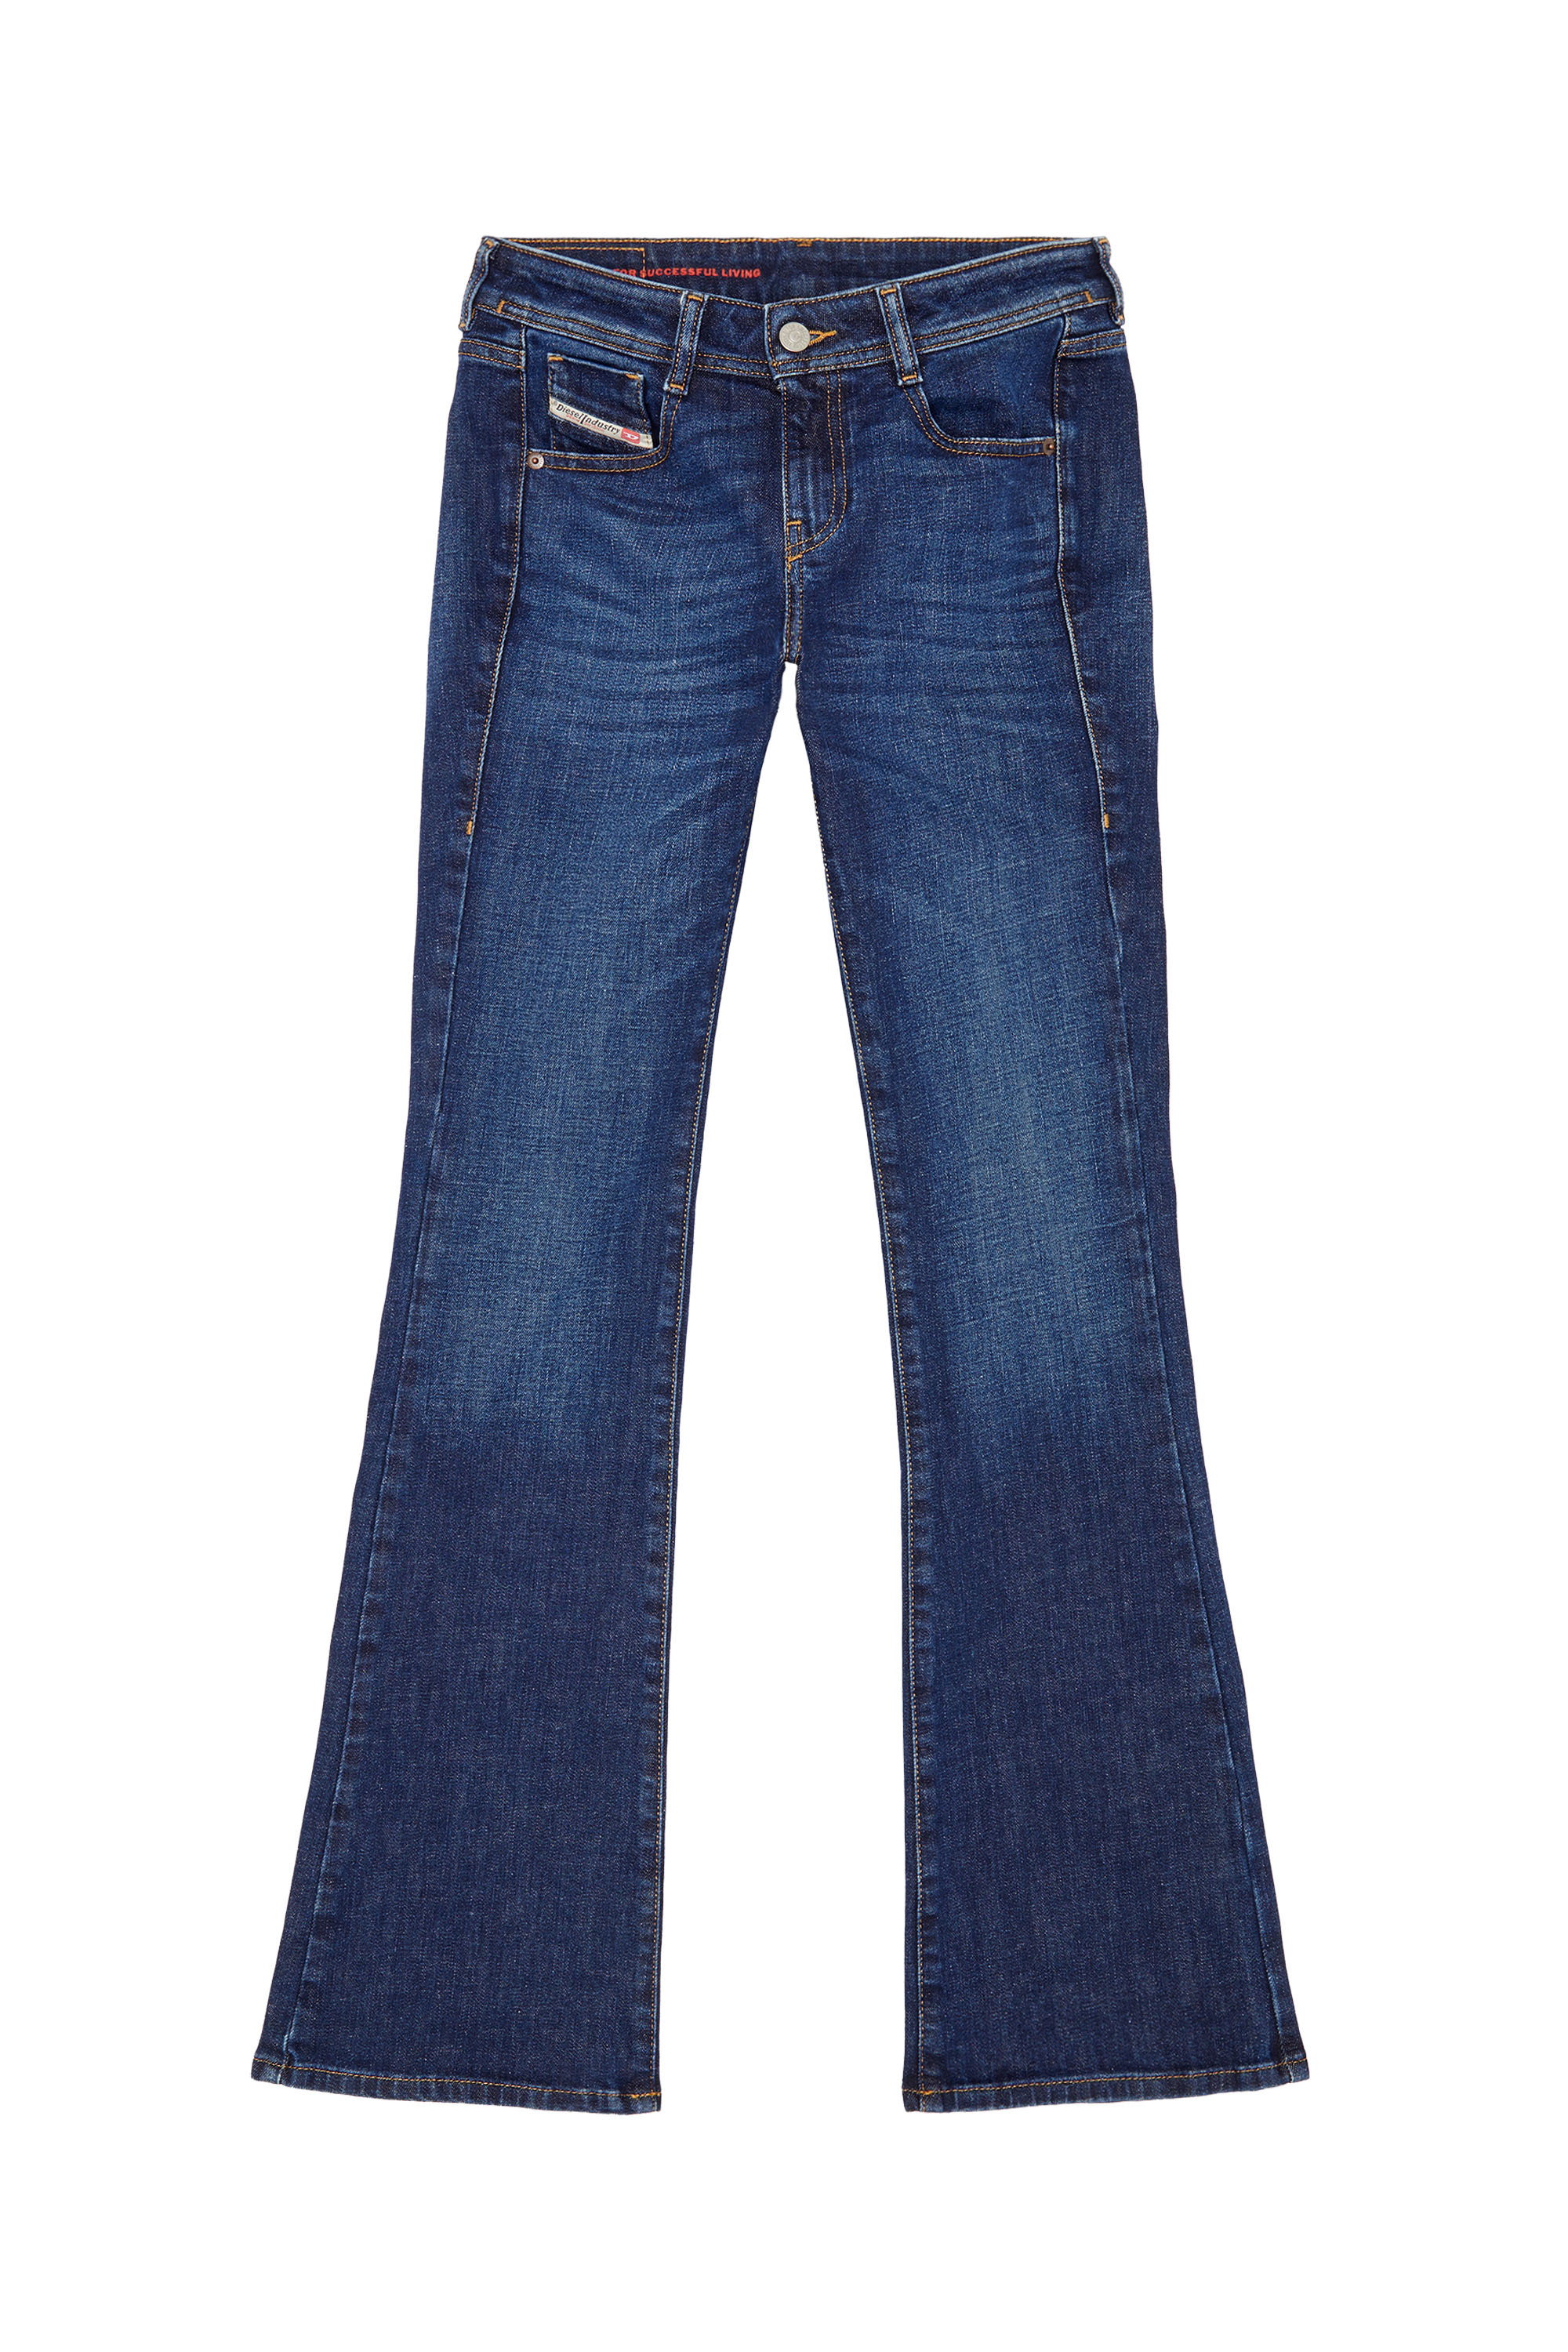 1969 D-EBBEY 09B90 Bootcut and Flare Jeans, Bleu Foncé - Jeans